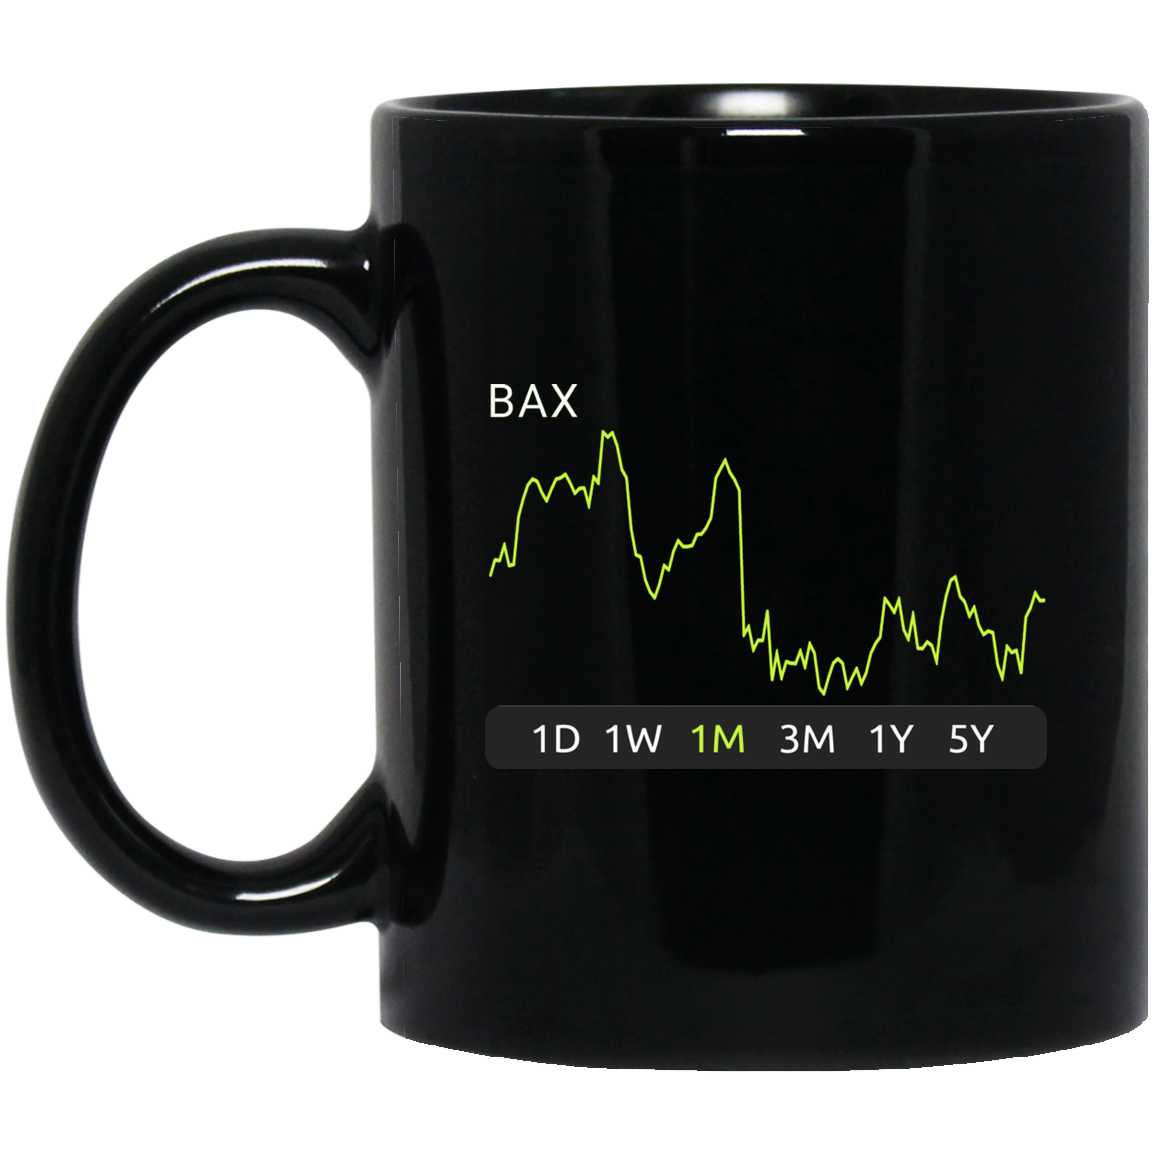 BAX Stock 1m Mug